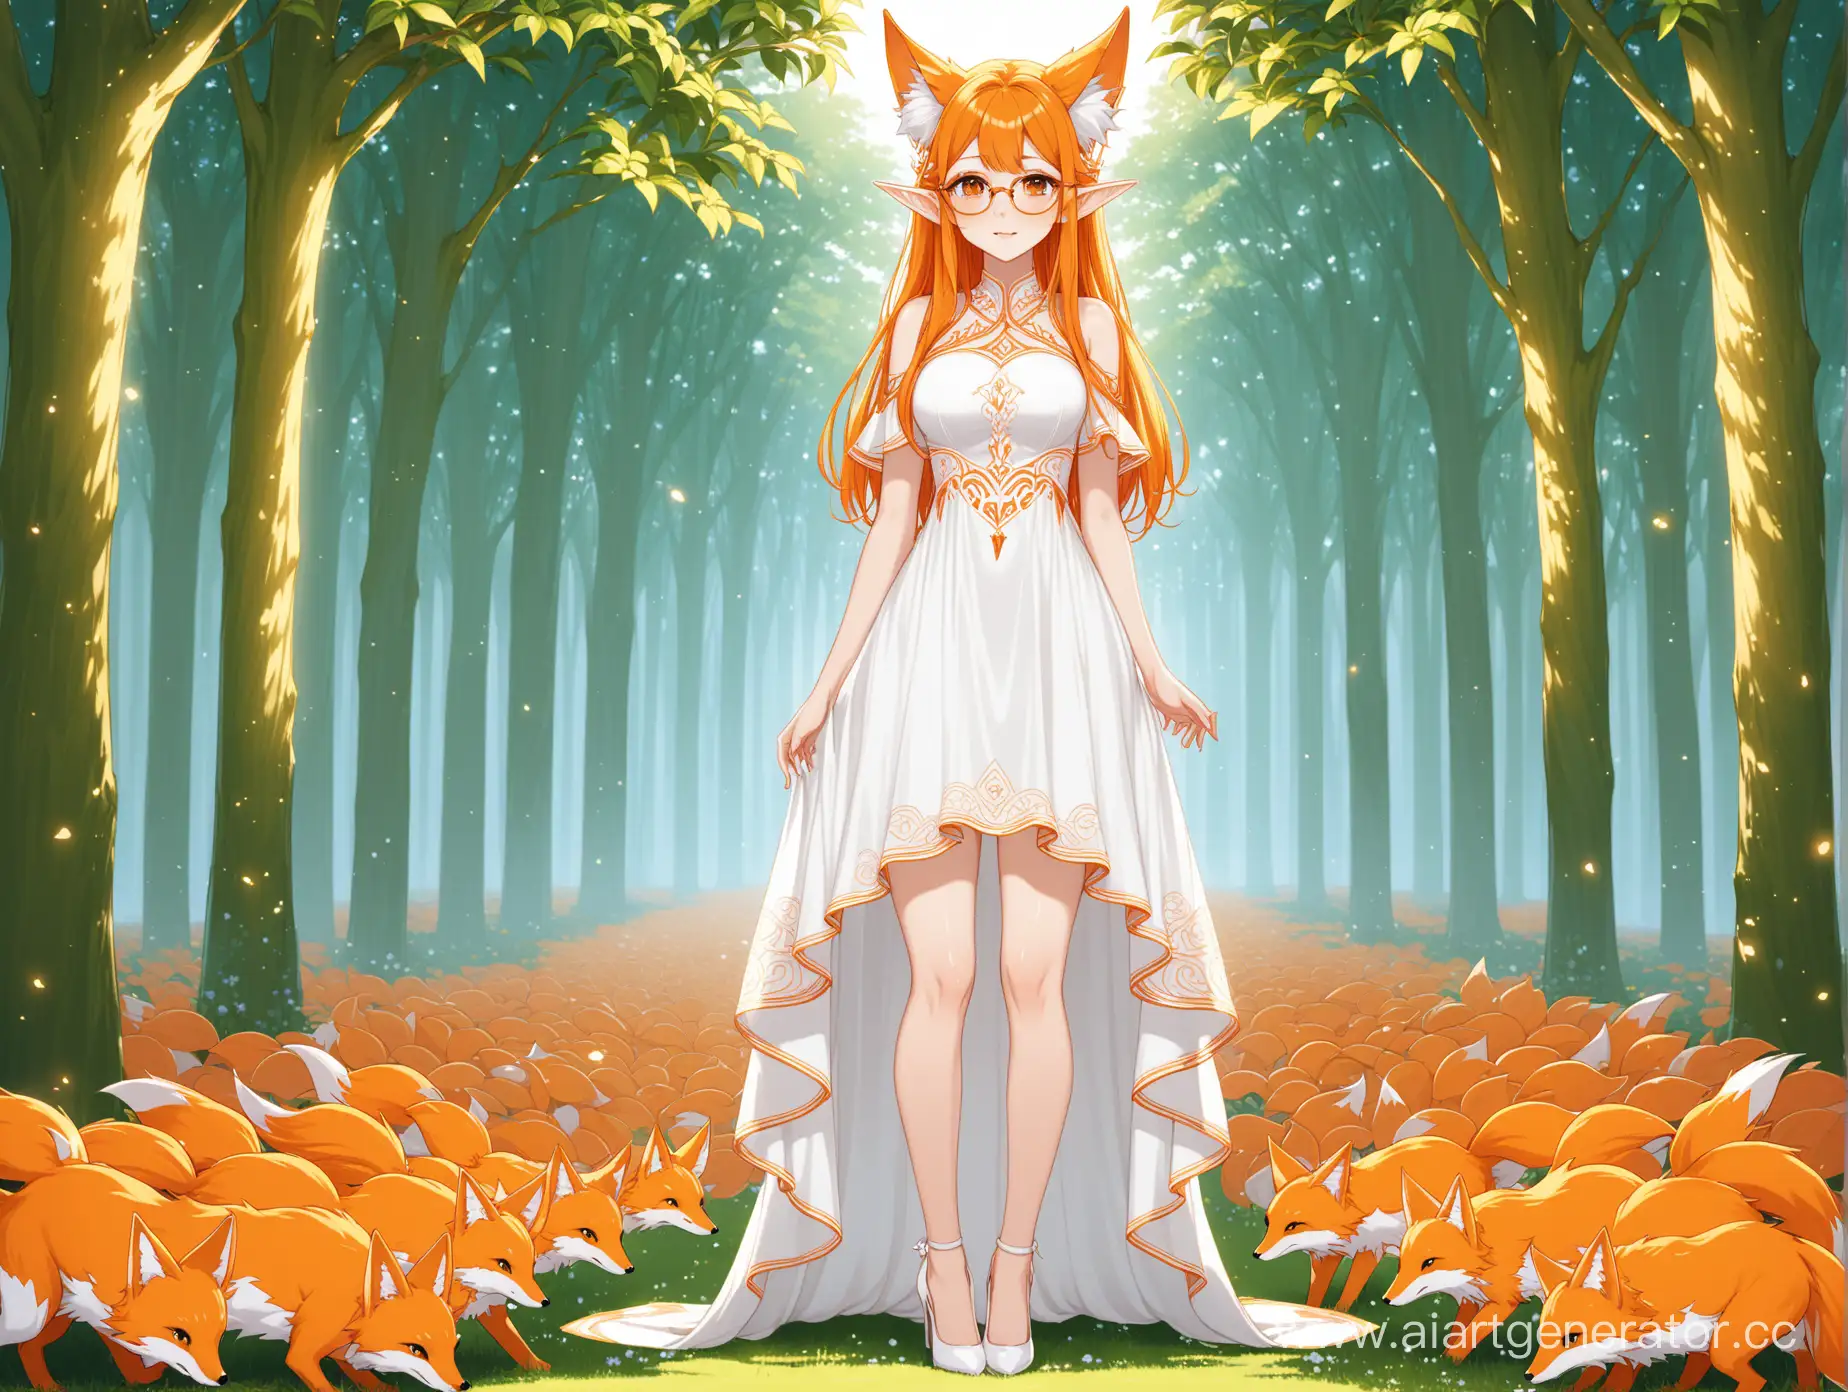 Whimsical-Elf-Girl-with-Orange-Fox-Features-in-Elegant-White-Attire